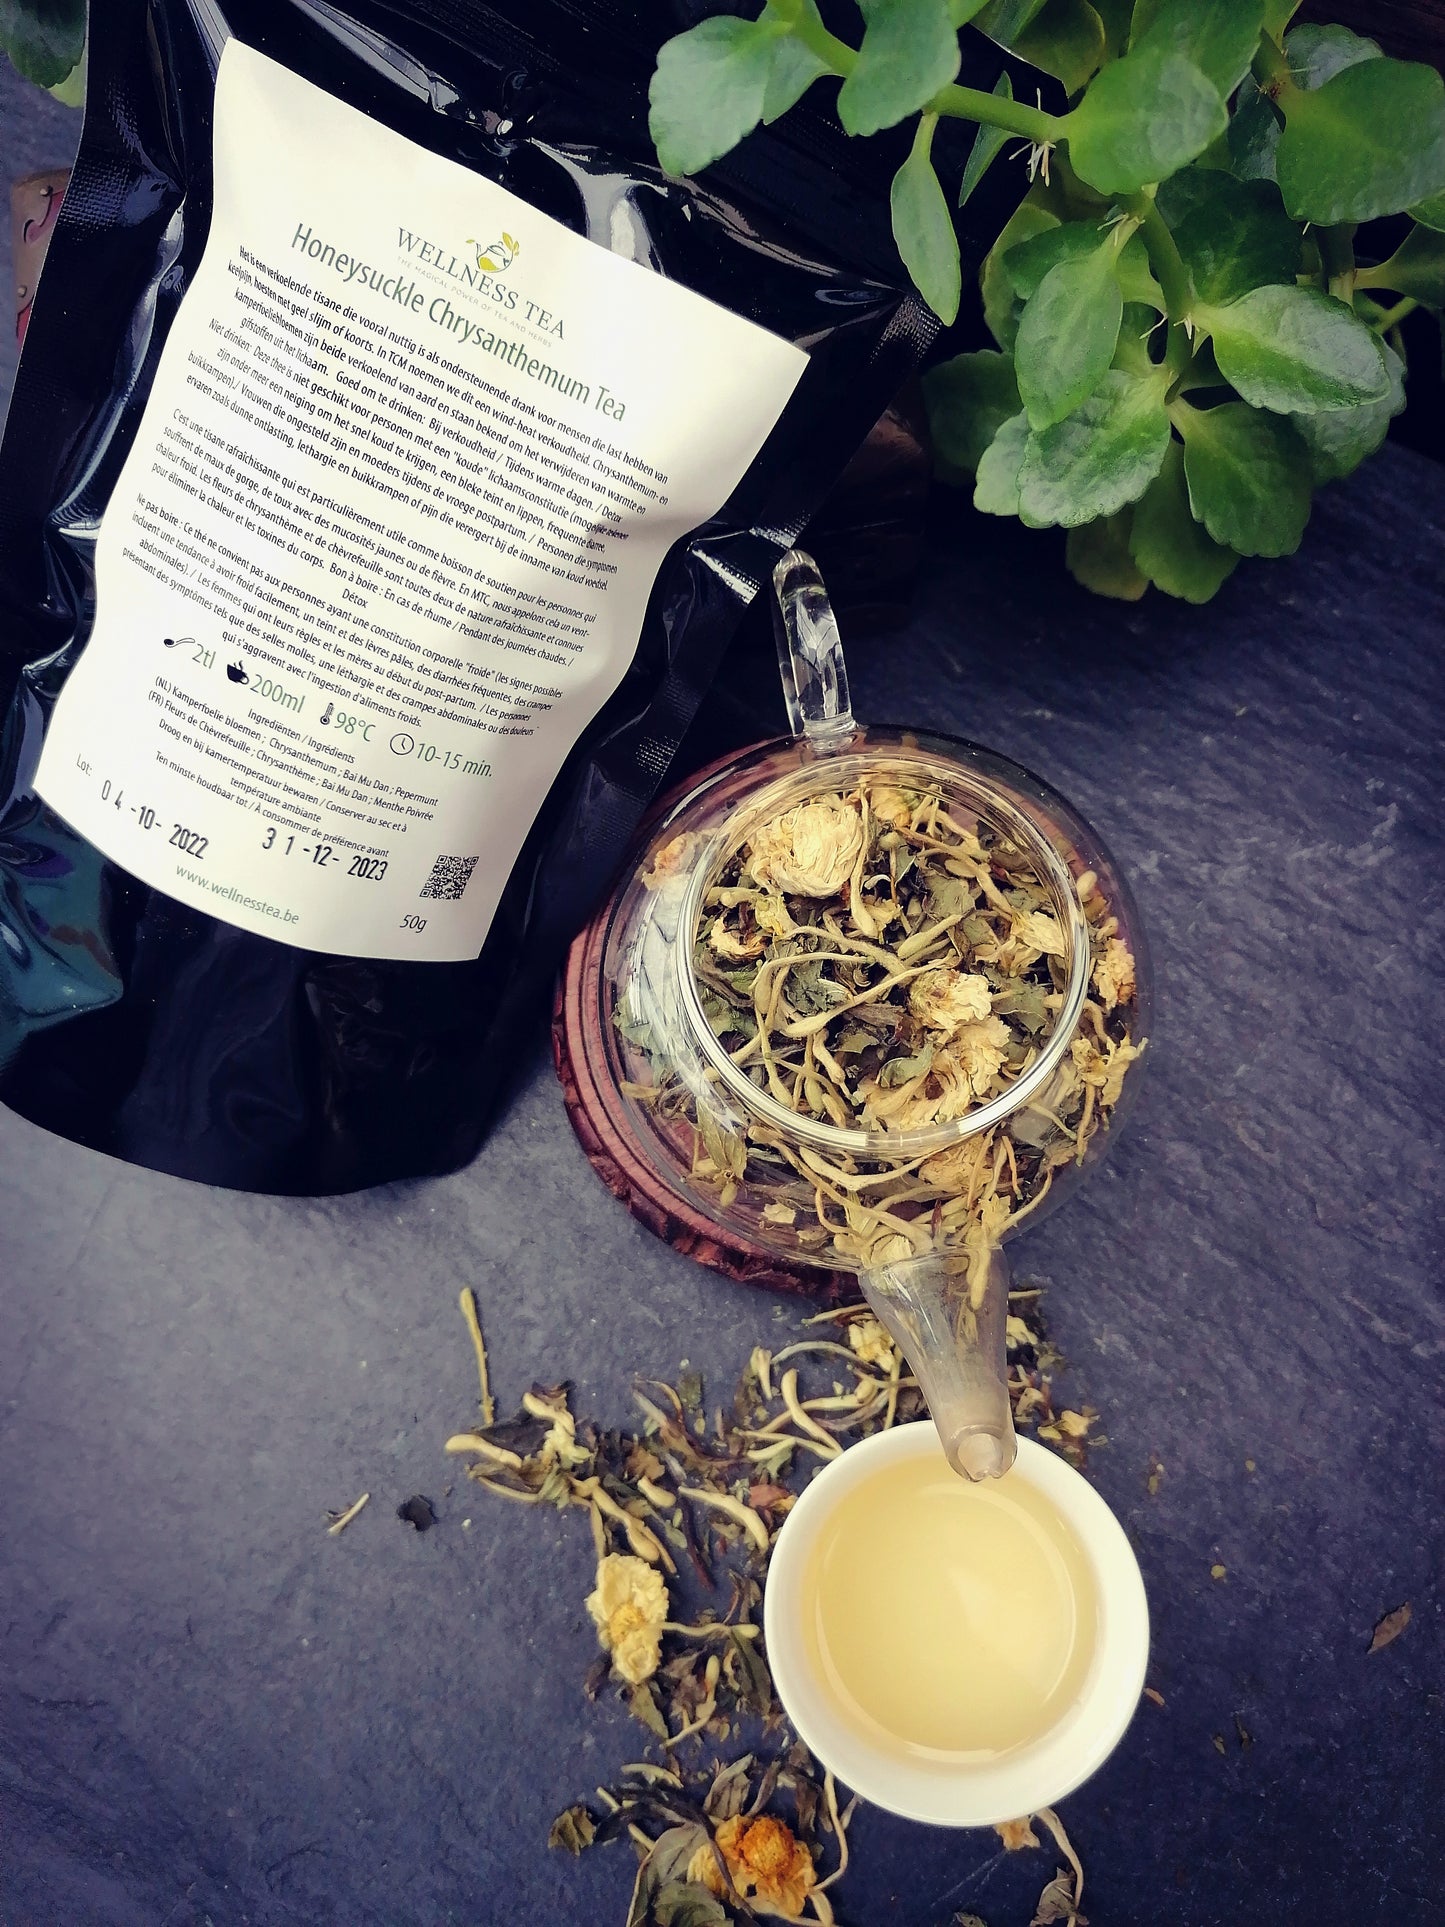 Honeysuckle Chrysanthemum Tea Package Herbs and Liquor